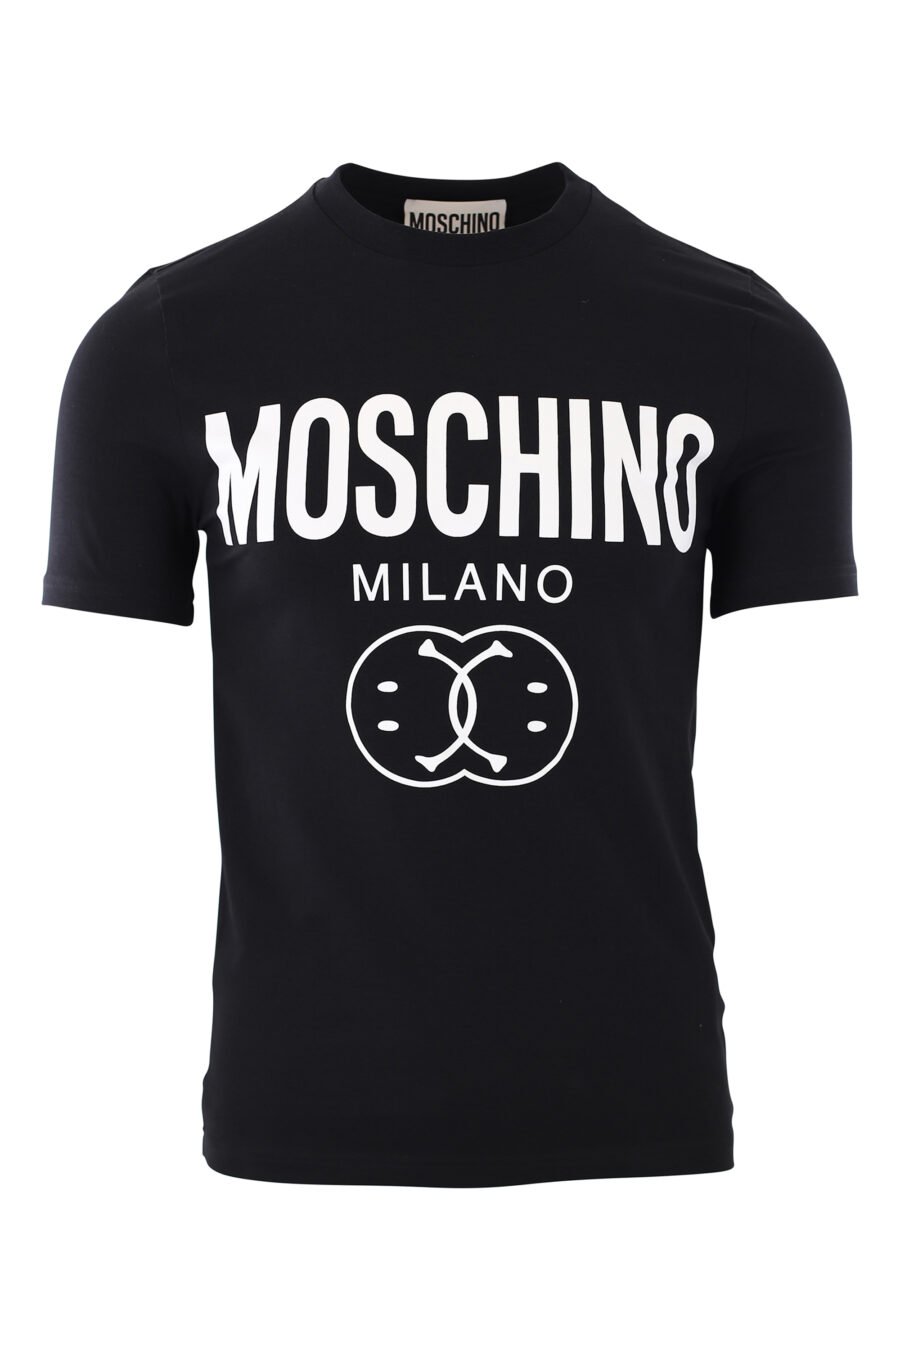 T-shirt preta com logótipo duplo "smiley" maxi - IMG 2425